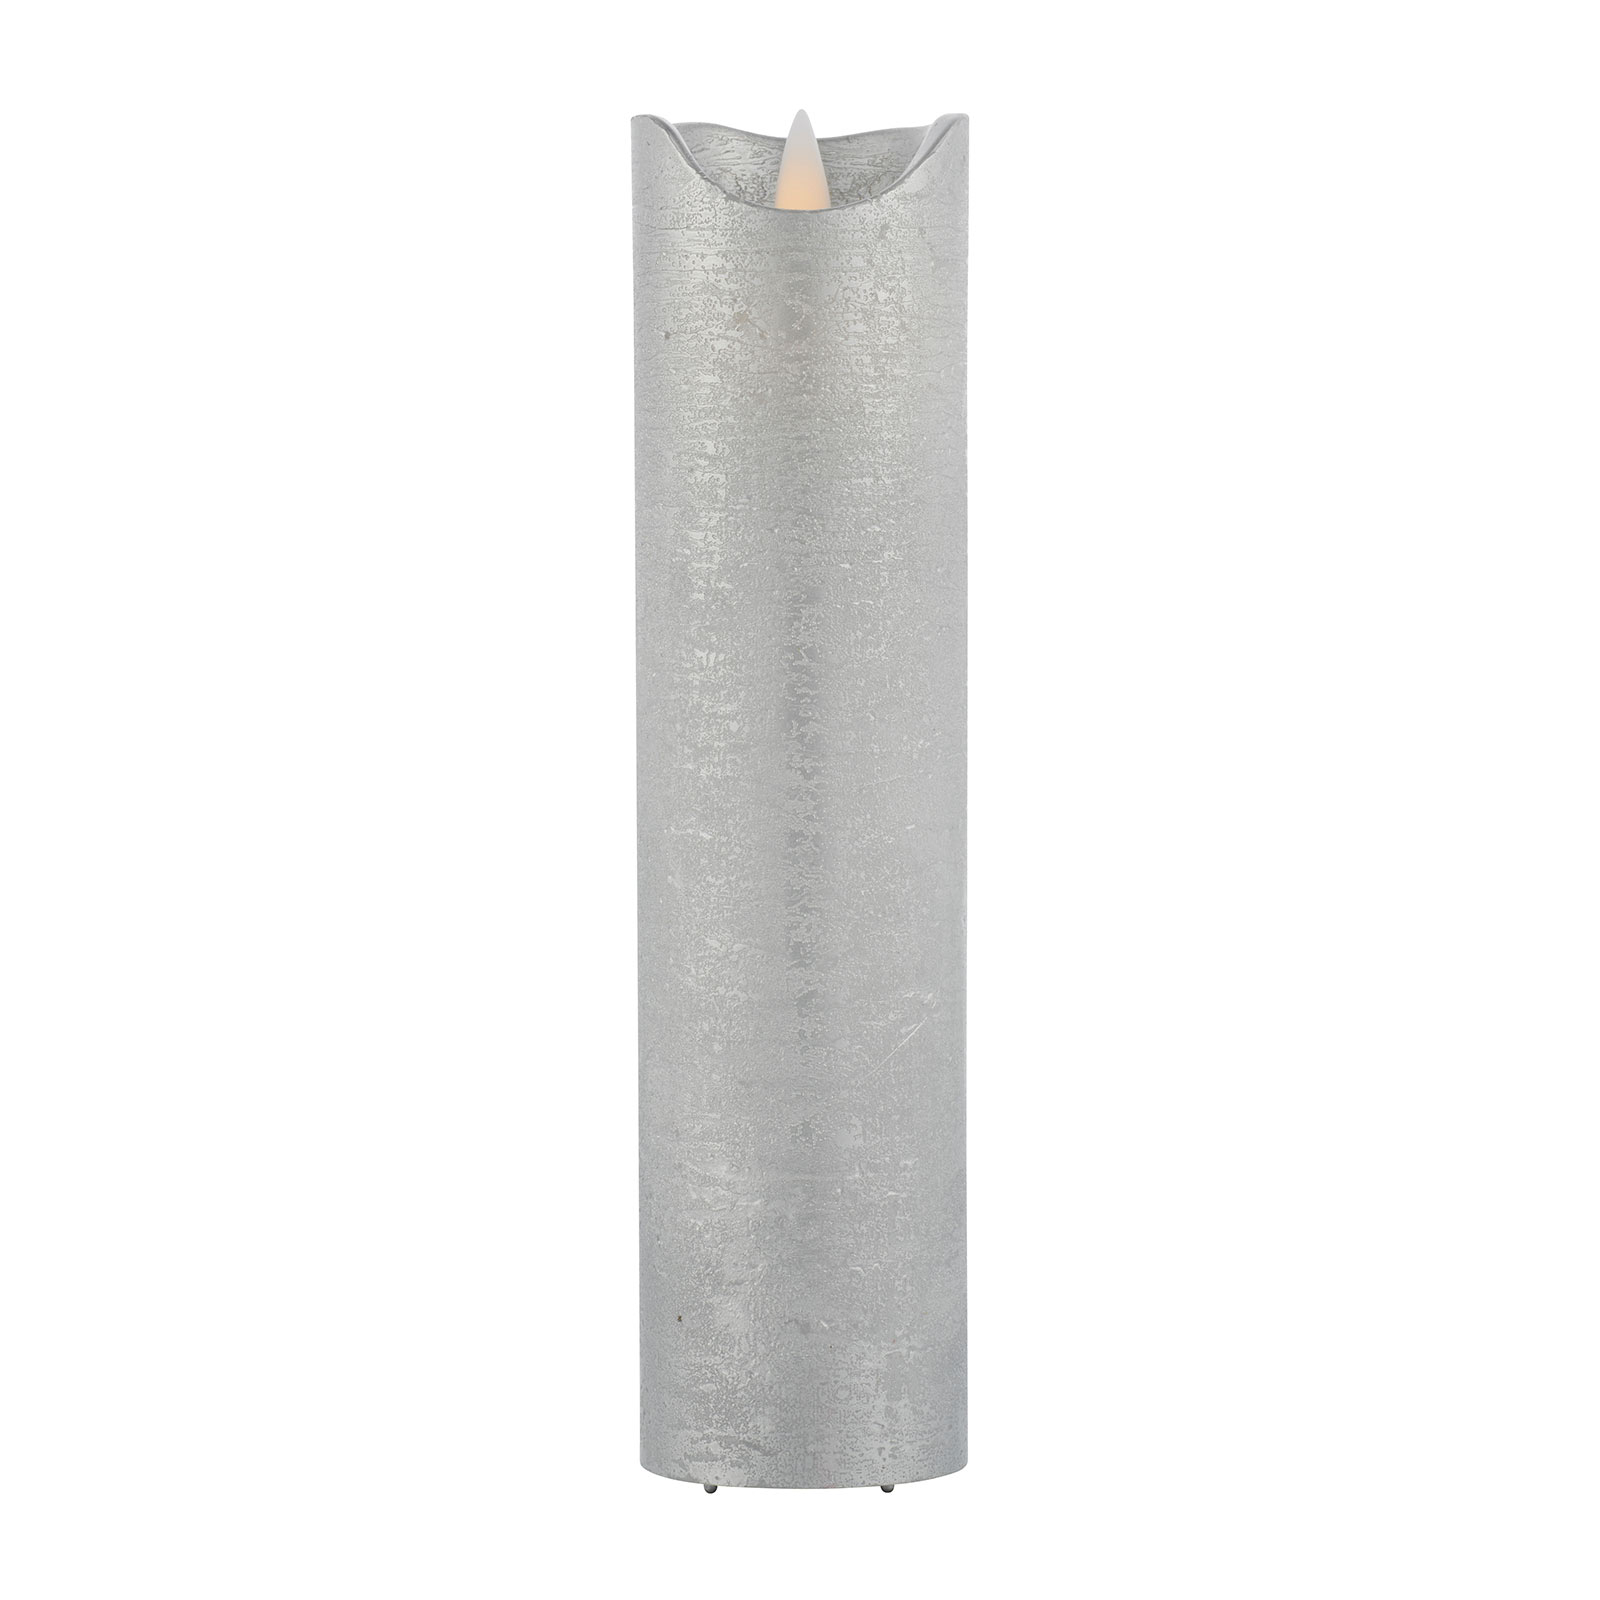 LED svíčka Sara Exclusive, stříbrná, Ø 5cm, výška 20cm